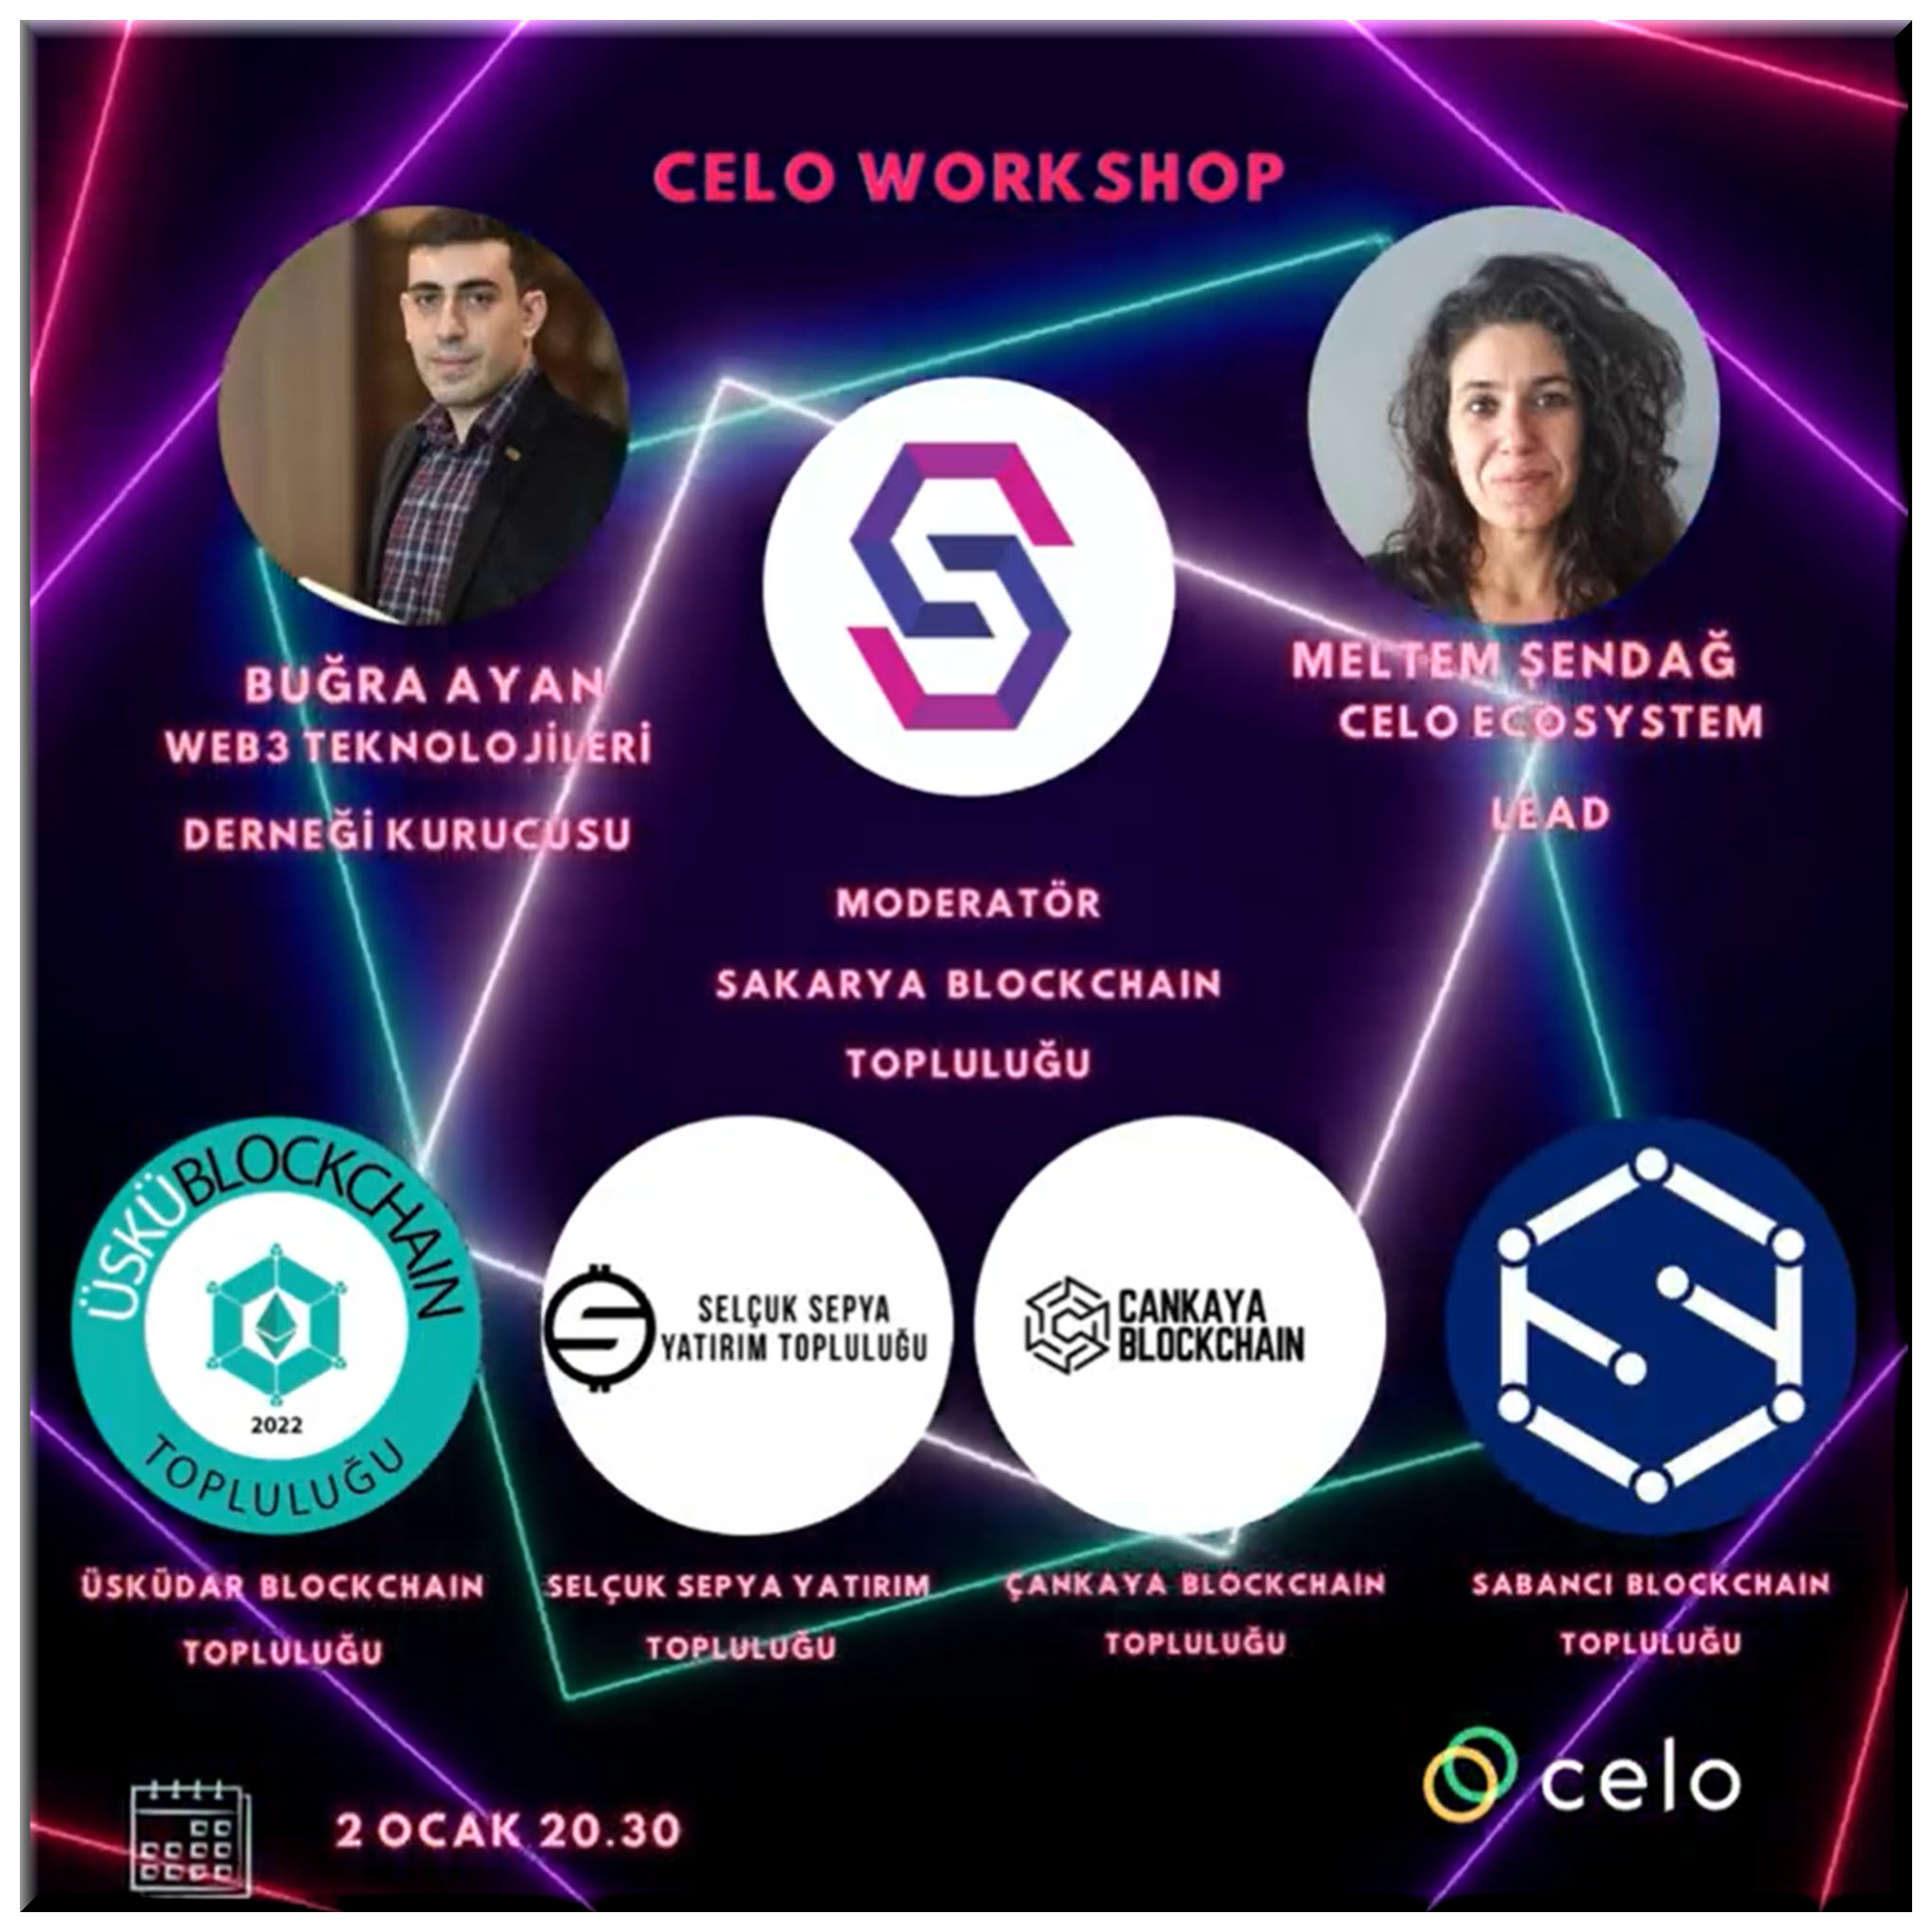 Celo Workshop